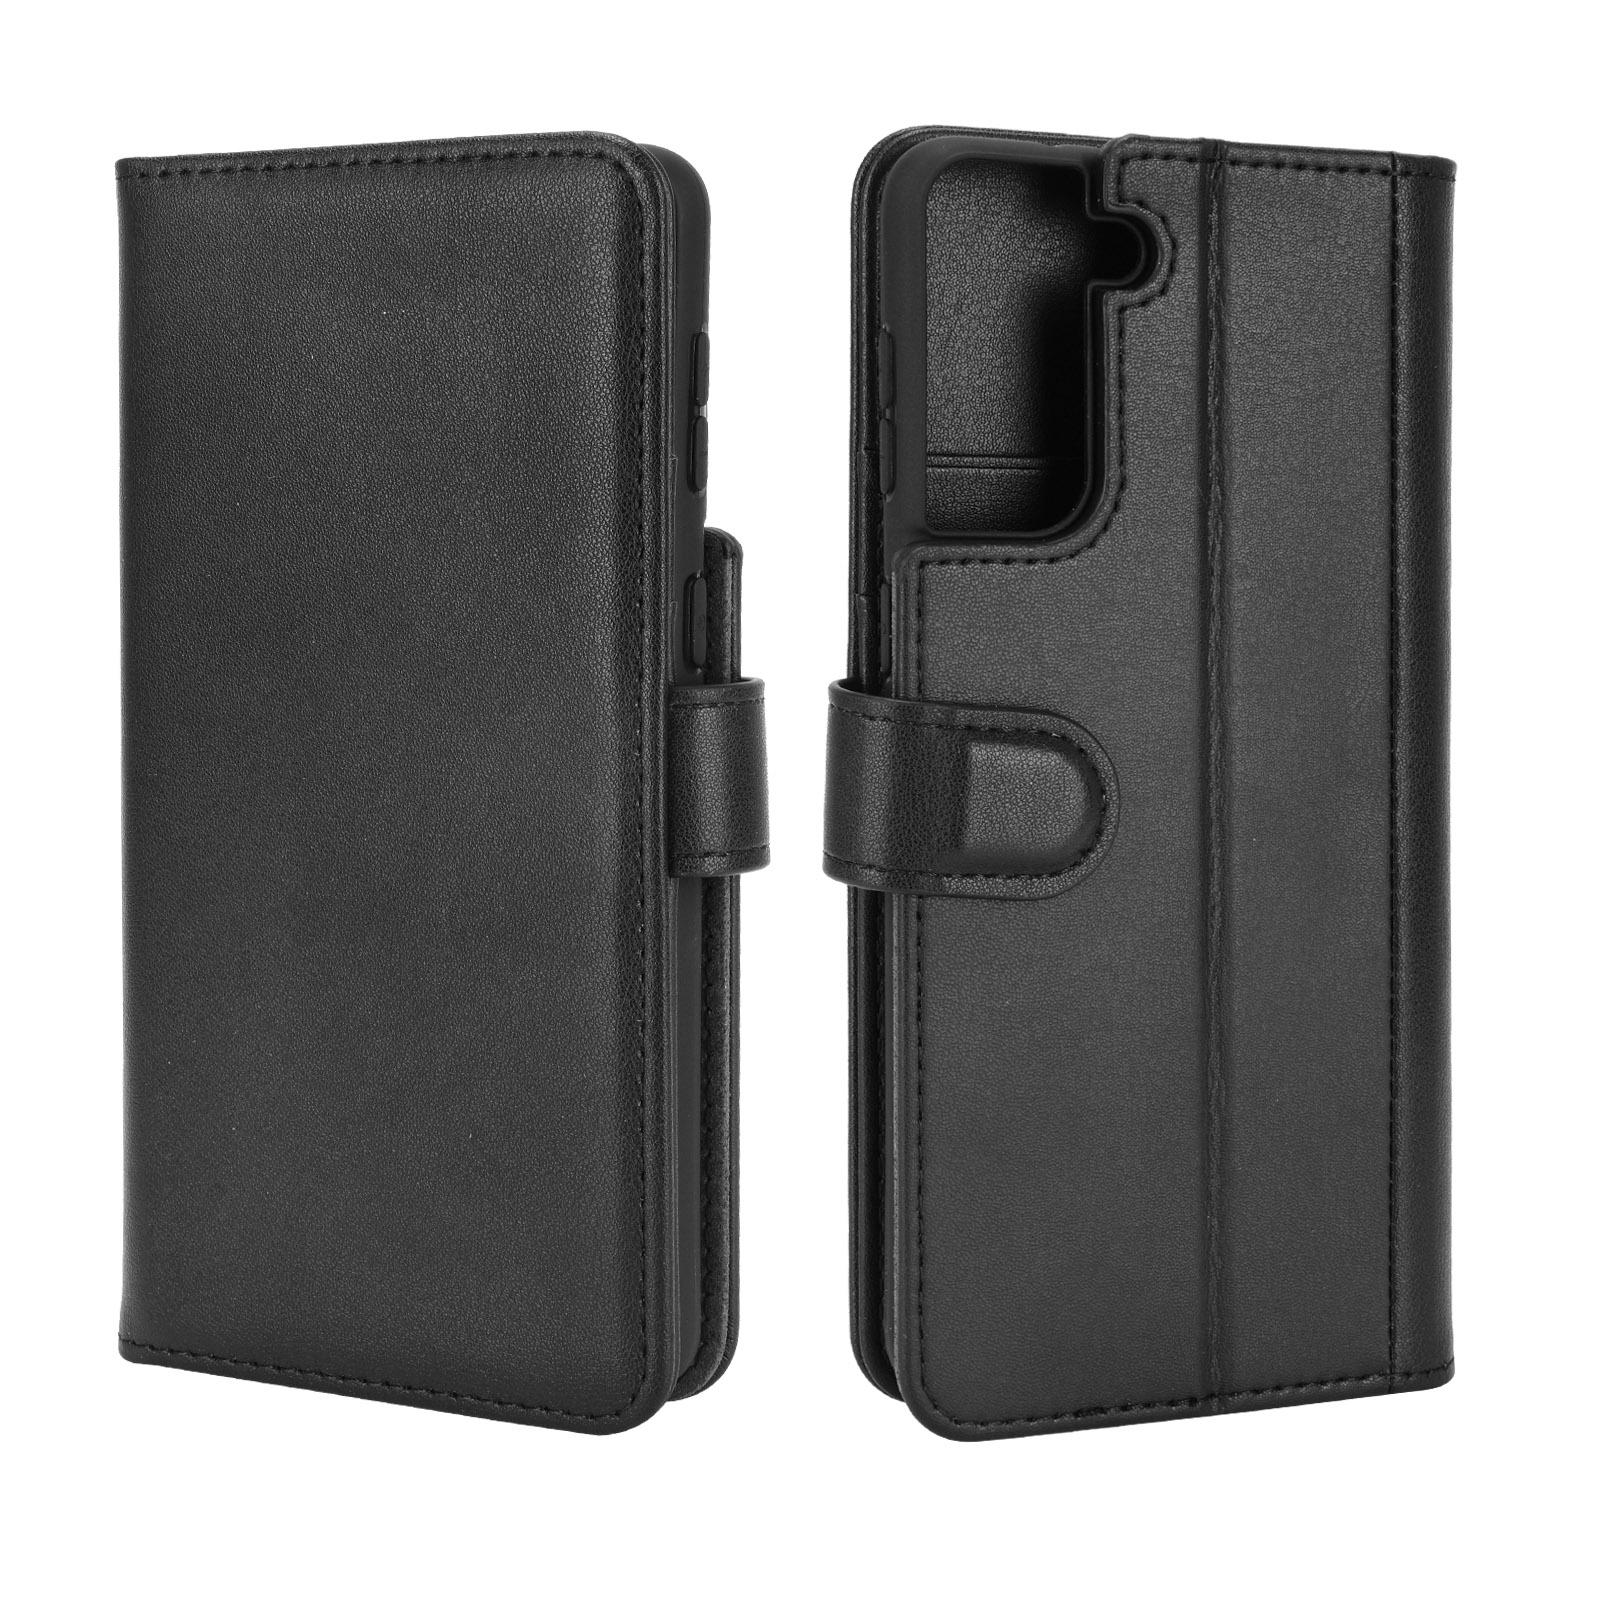 Samsung Galaxy S21 Plånboksfodral i Äkta Läder, svart